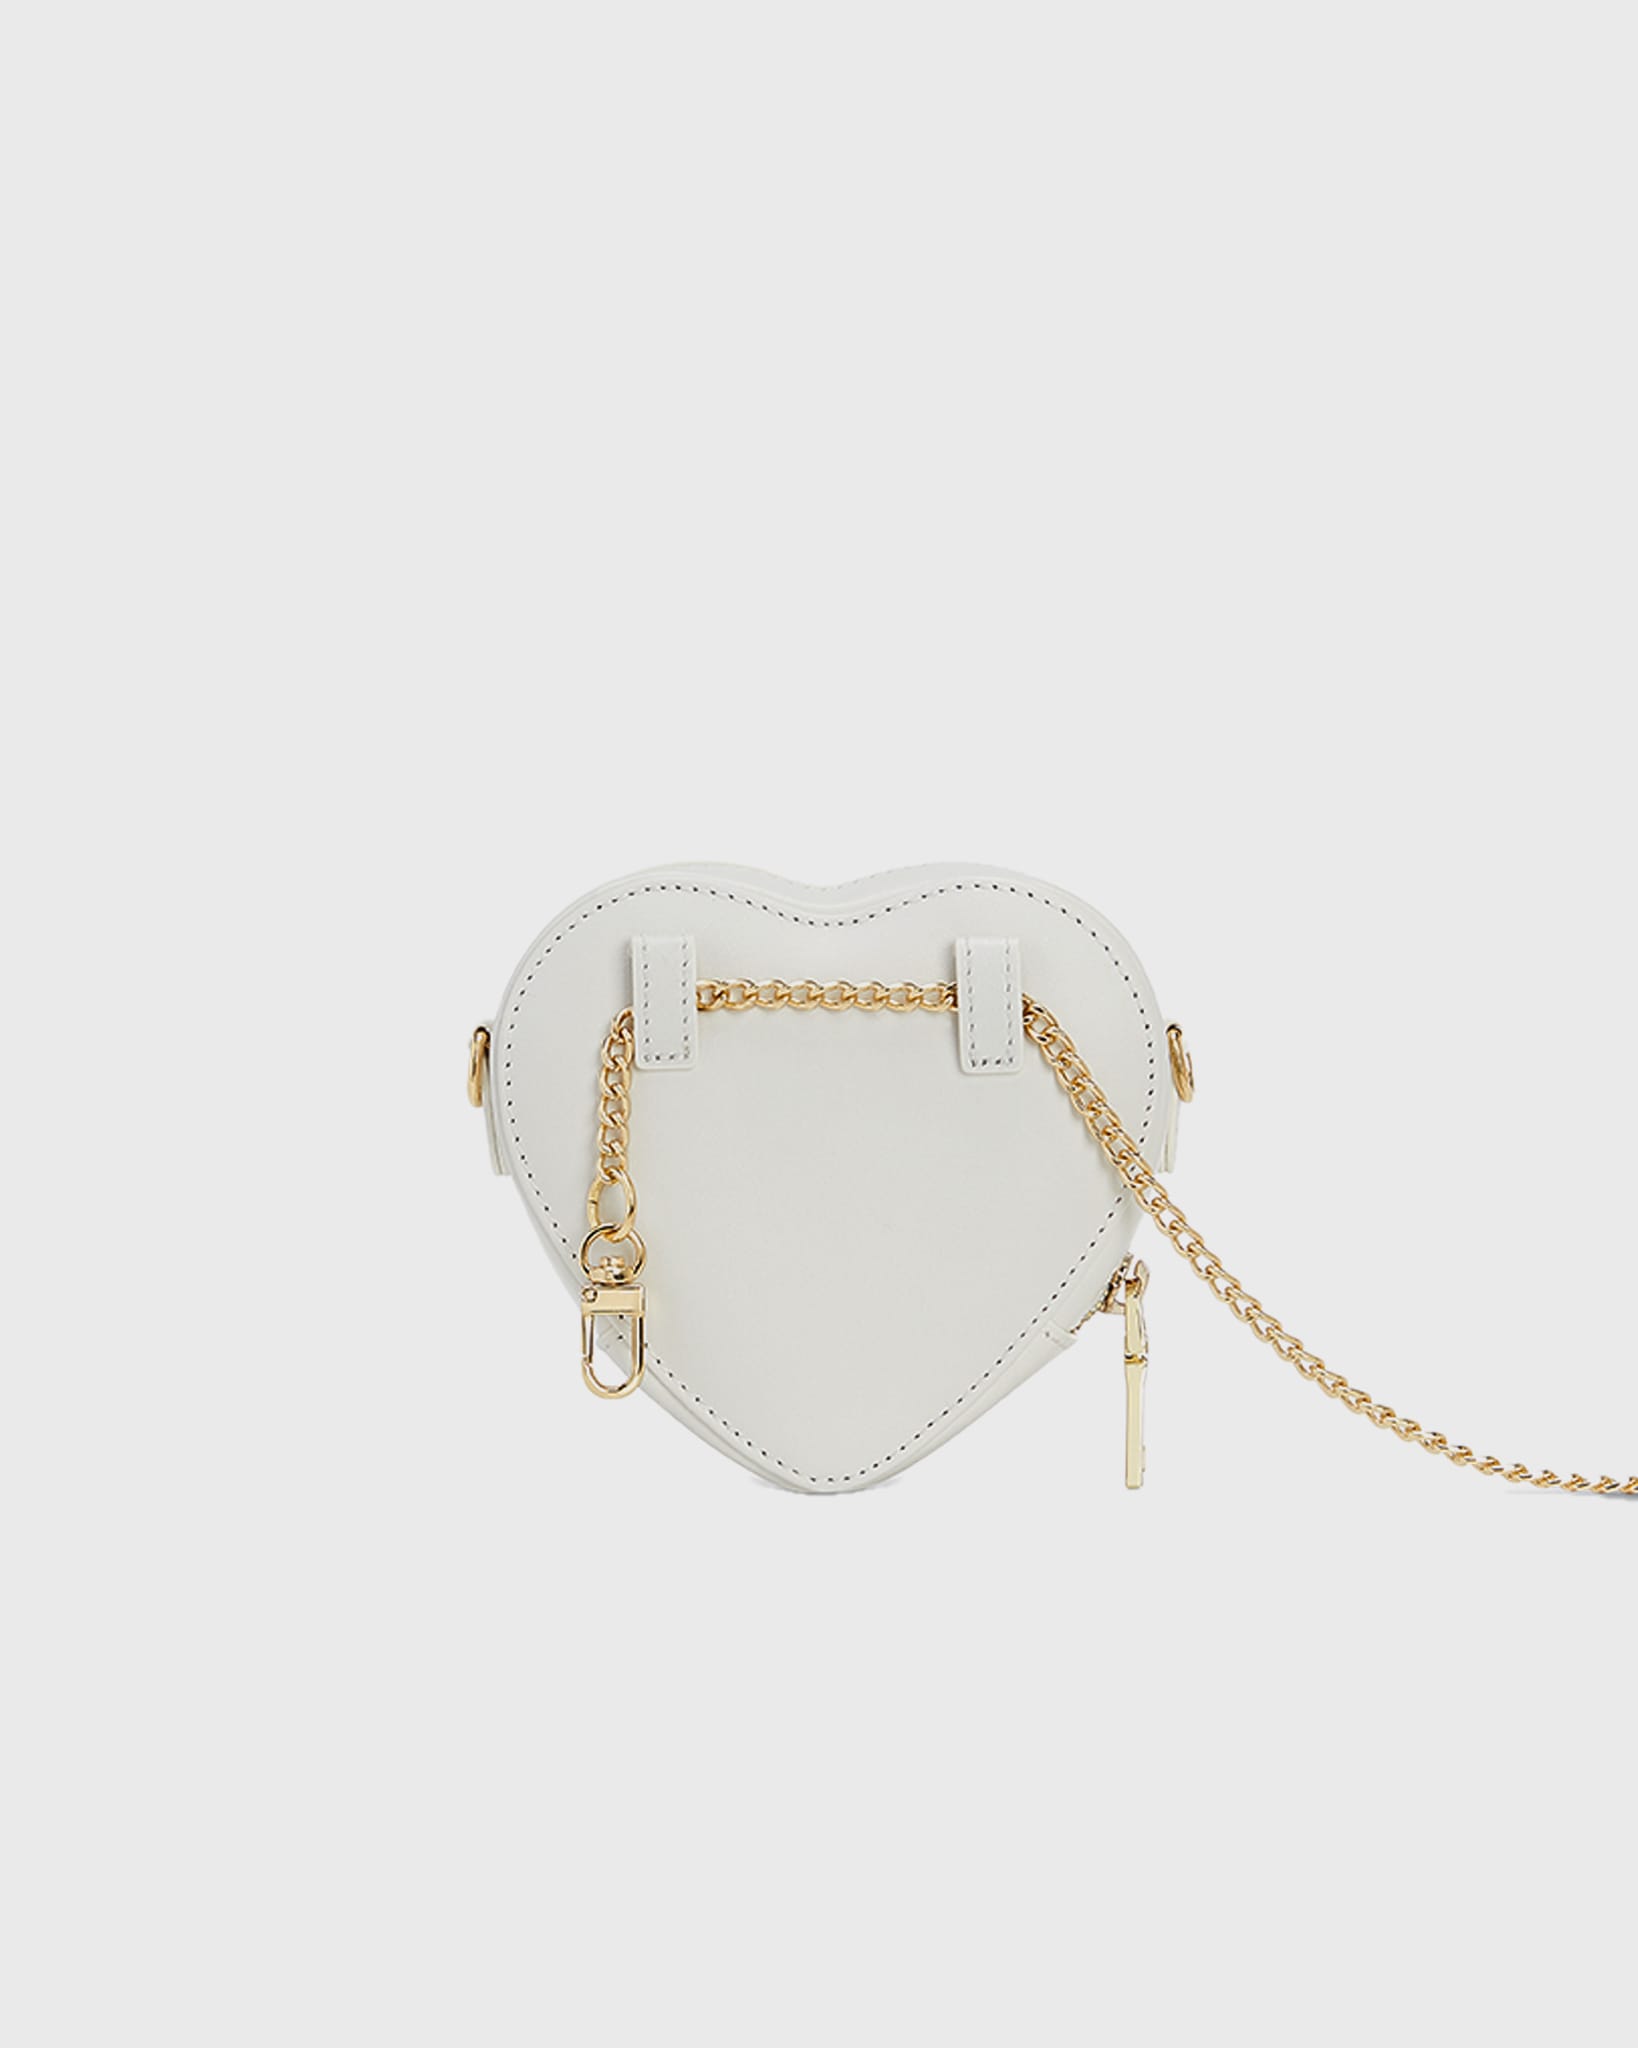 MH Mini Heart Bag Pastel – WEAT-STUDIO